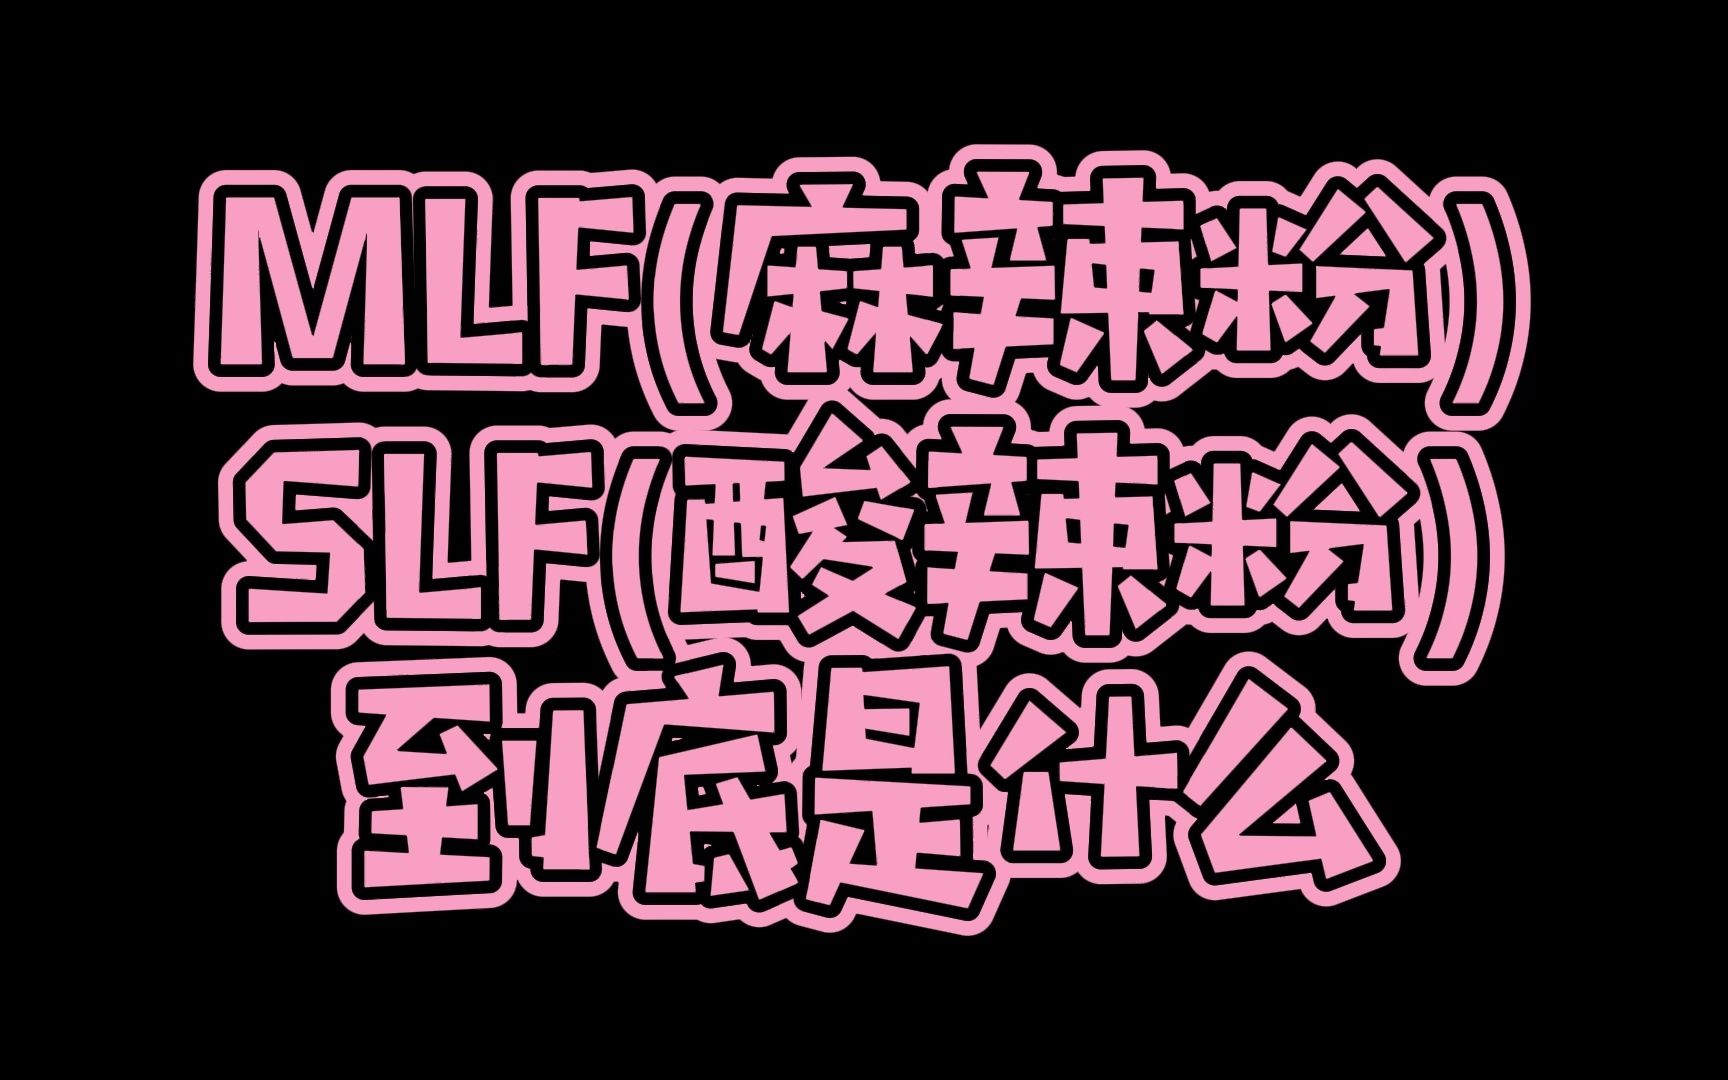 mlf(麻辣粉)slf(酸辣粉)到底是什么?